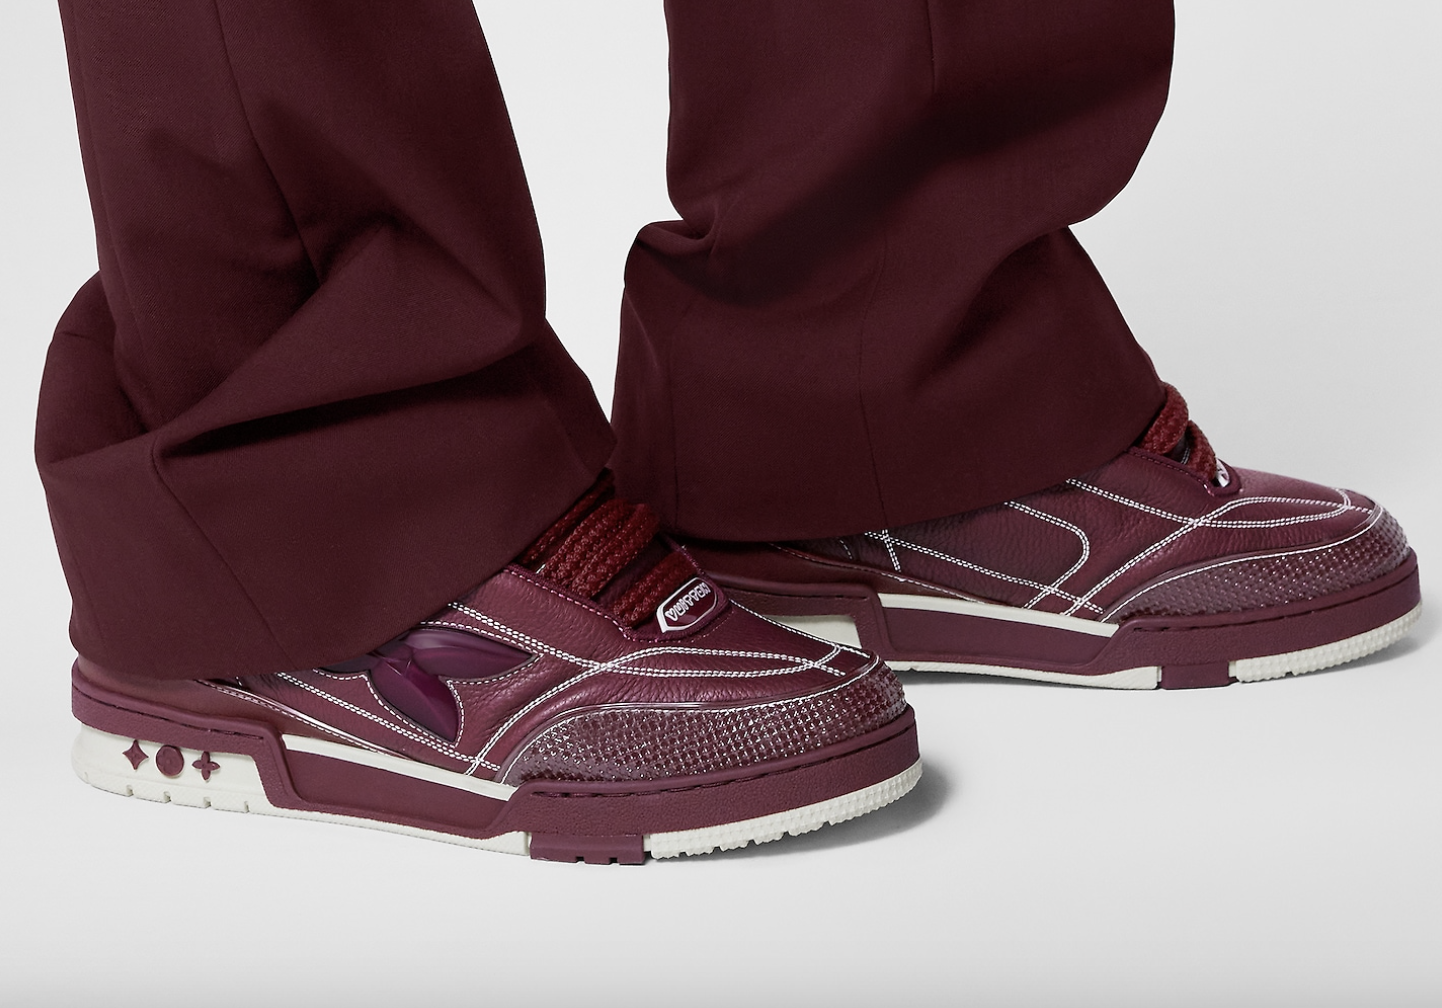 Louis Vuitton Unveils New $1,340 Skate Sneaker